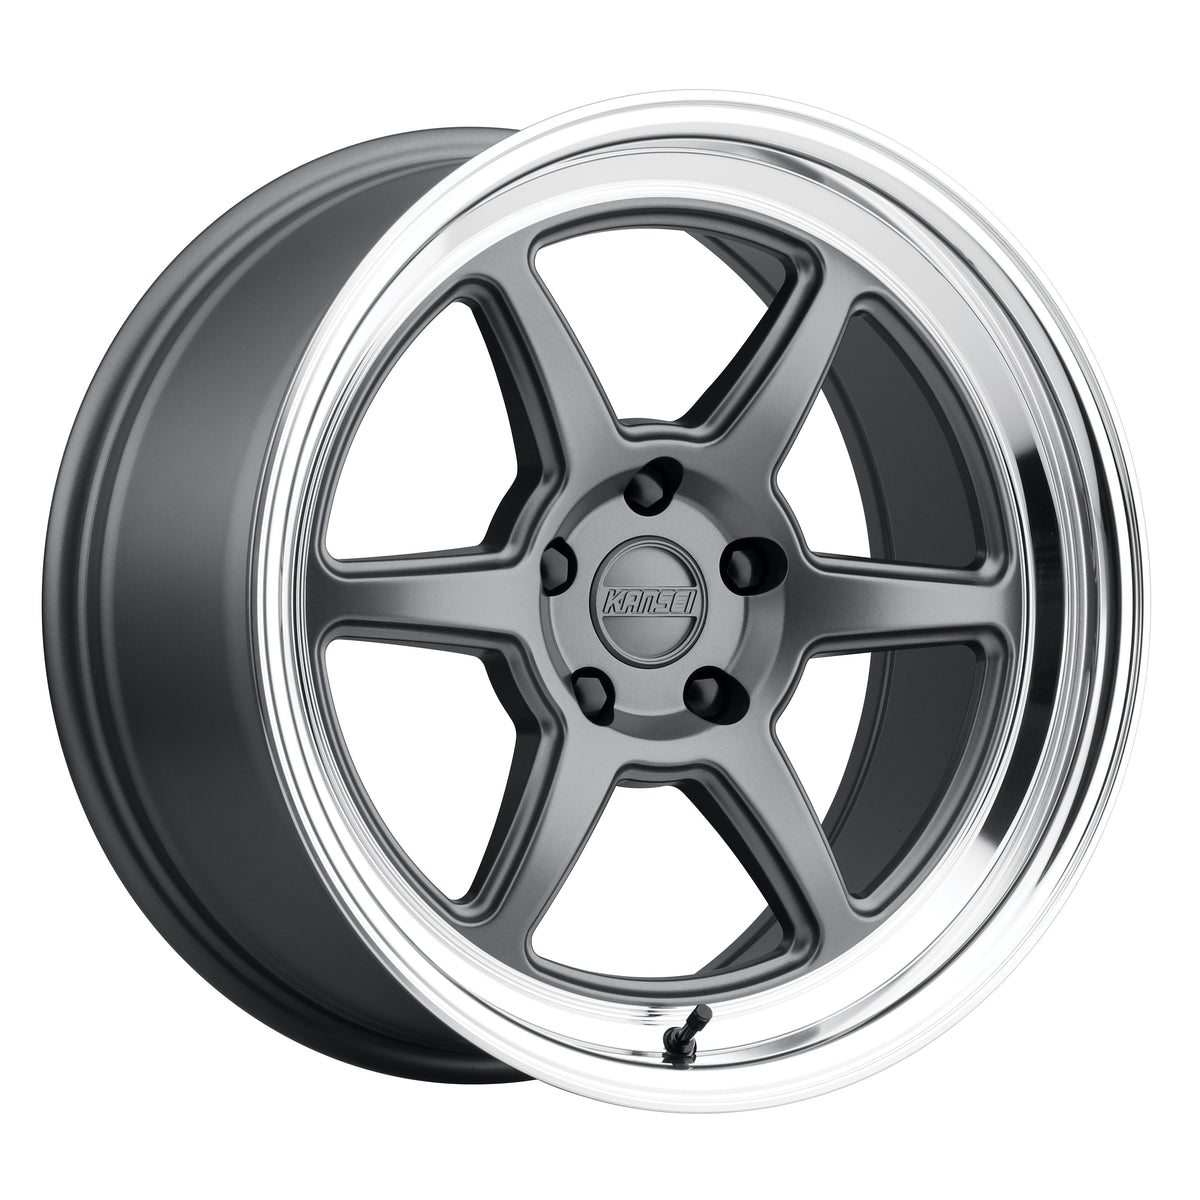 K14G ROKU Wheel, Size: 18" x 9.50", Bolt Pattern: 5 x 110 mm, Backspace: 4.23" [Finish: Grey and Machined Lip]